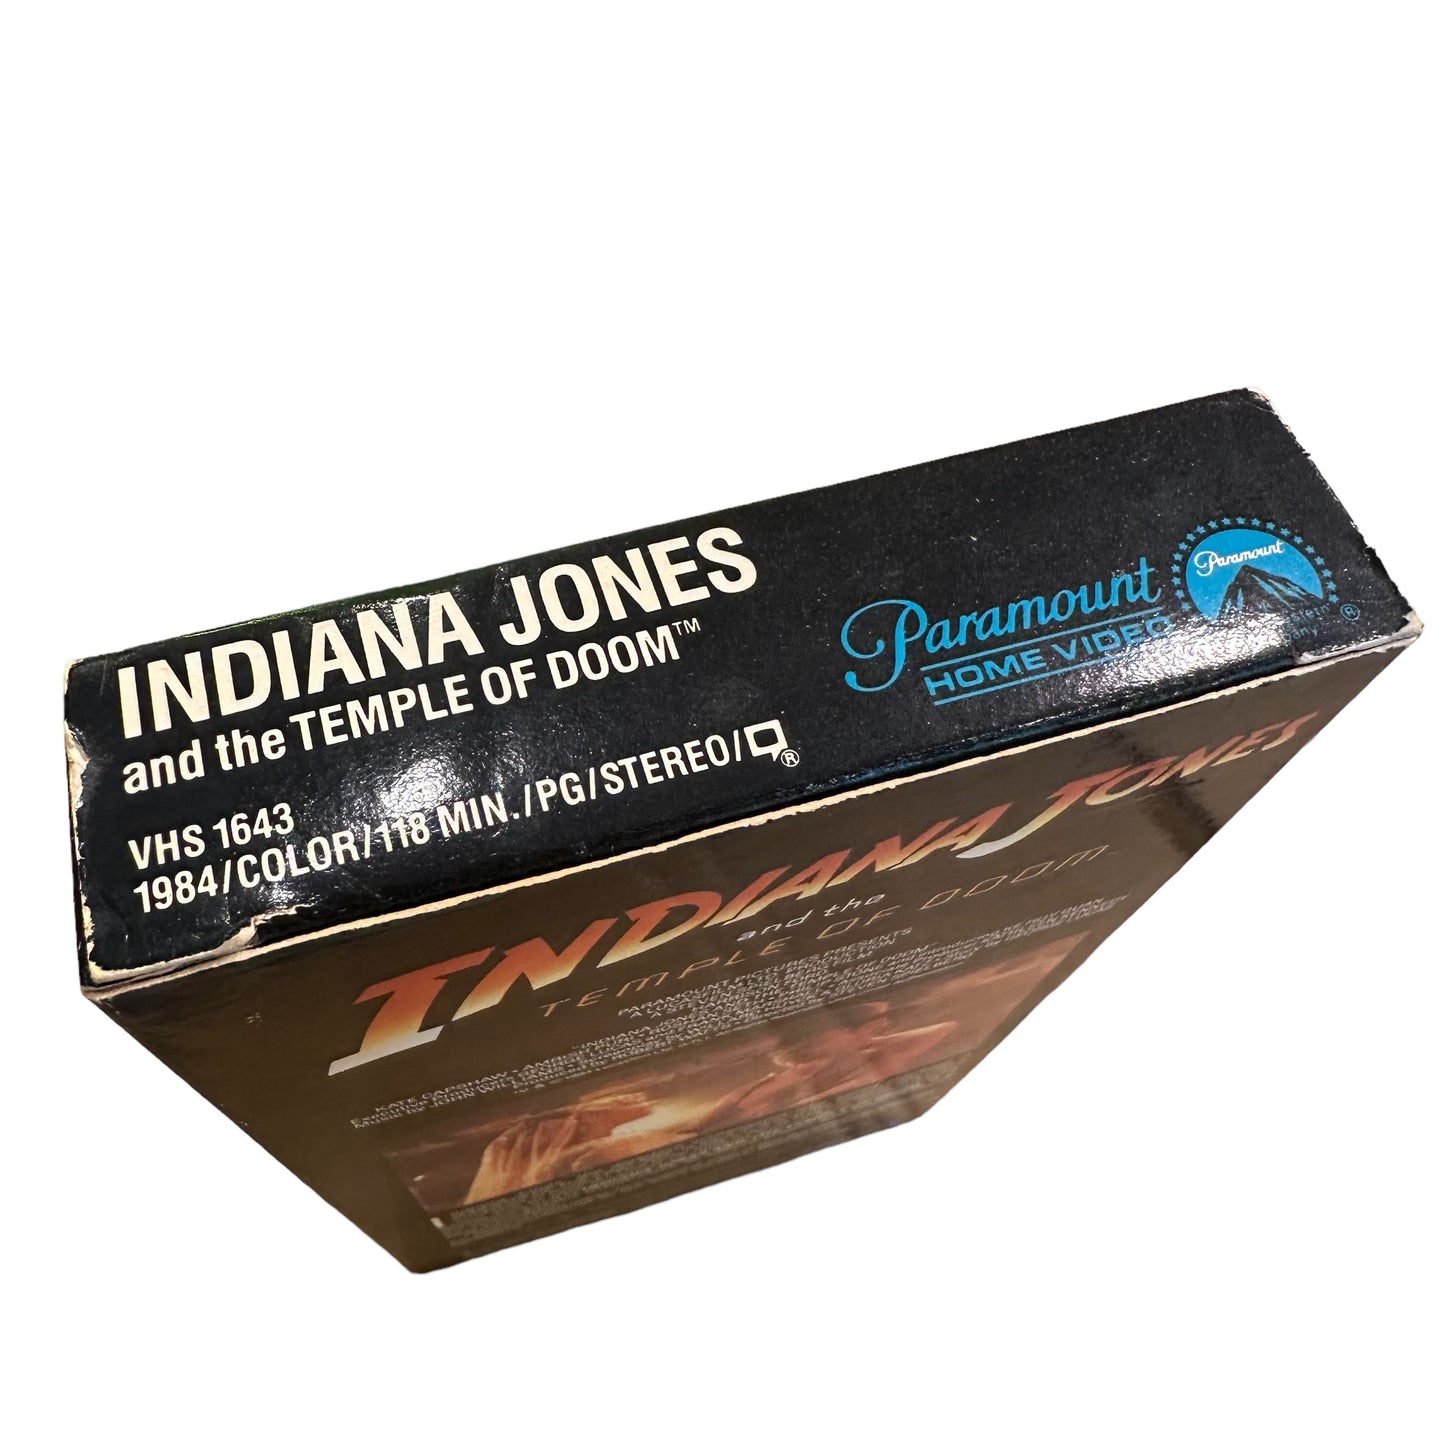 VHS ビデオテープ 輸入版 インディ・ジョーンズ / 魔宮の伝説 Indiana Jones and the Temple of Doom 海外版 USA アメリカ ヴィンテージ ビデオ 紙ジャケ